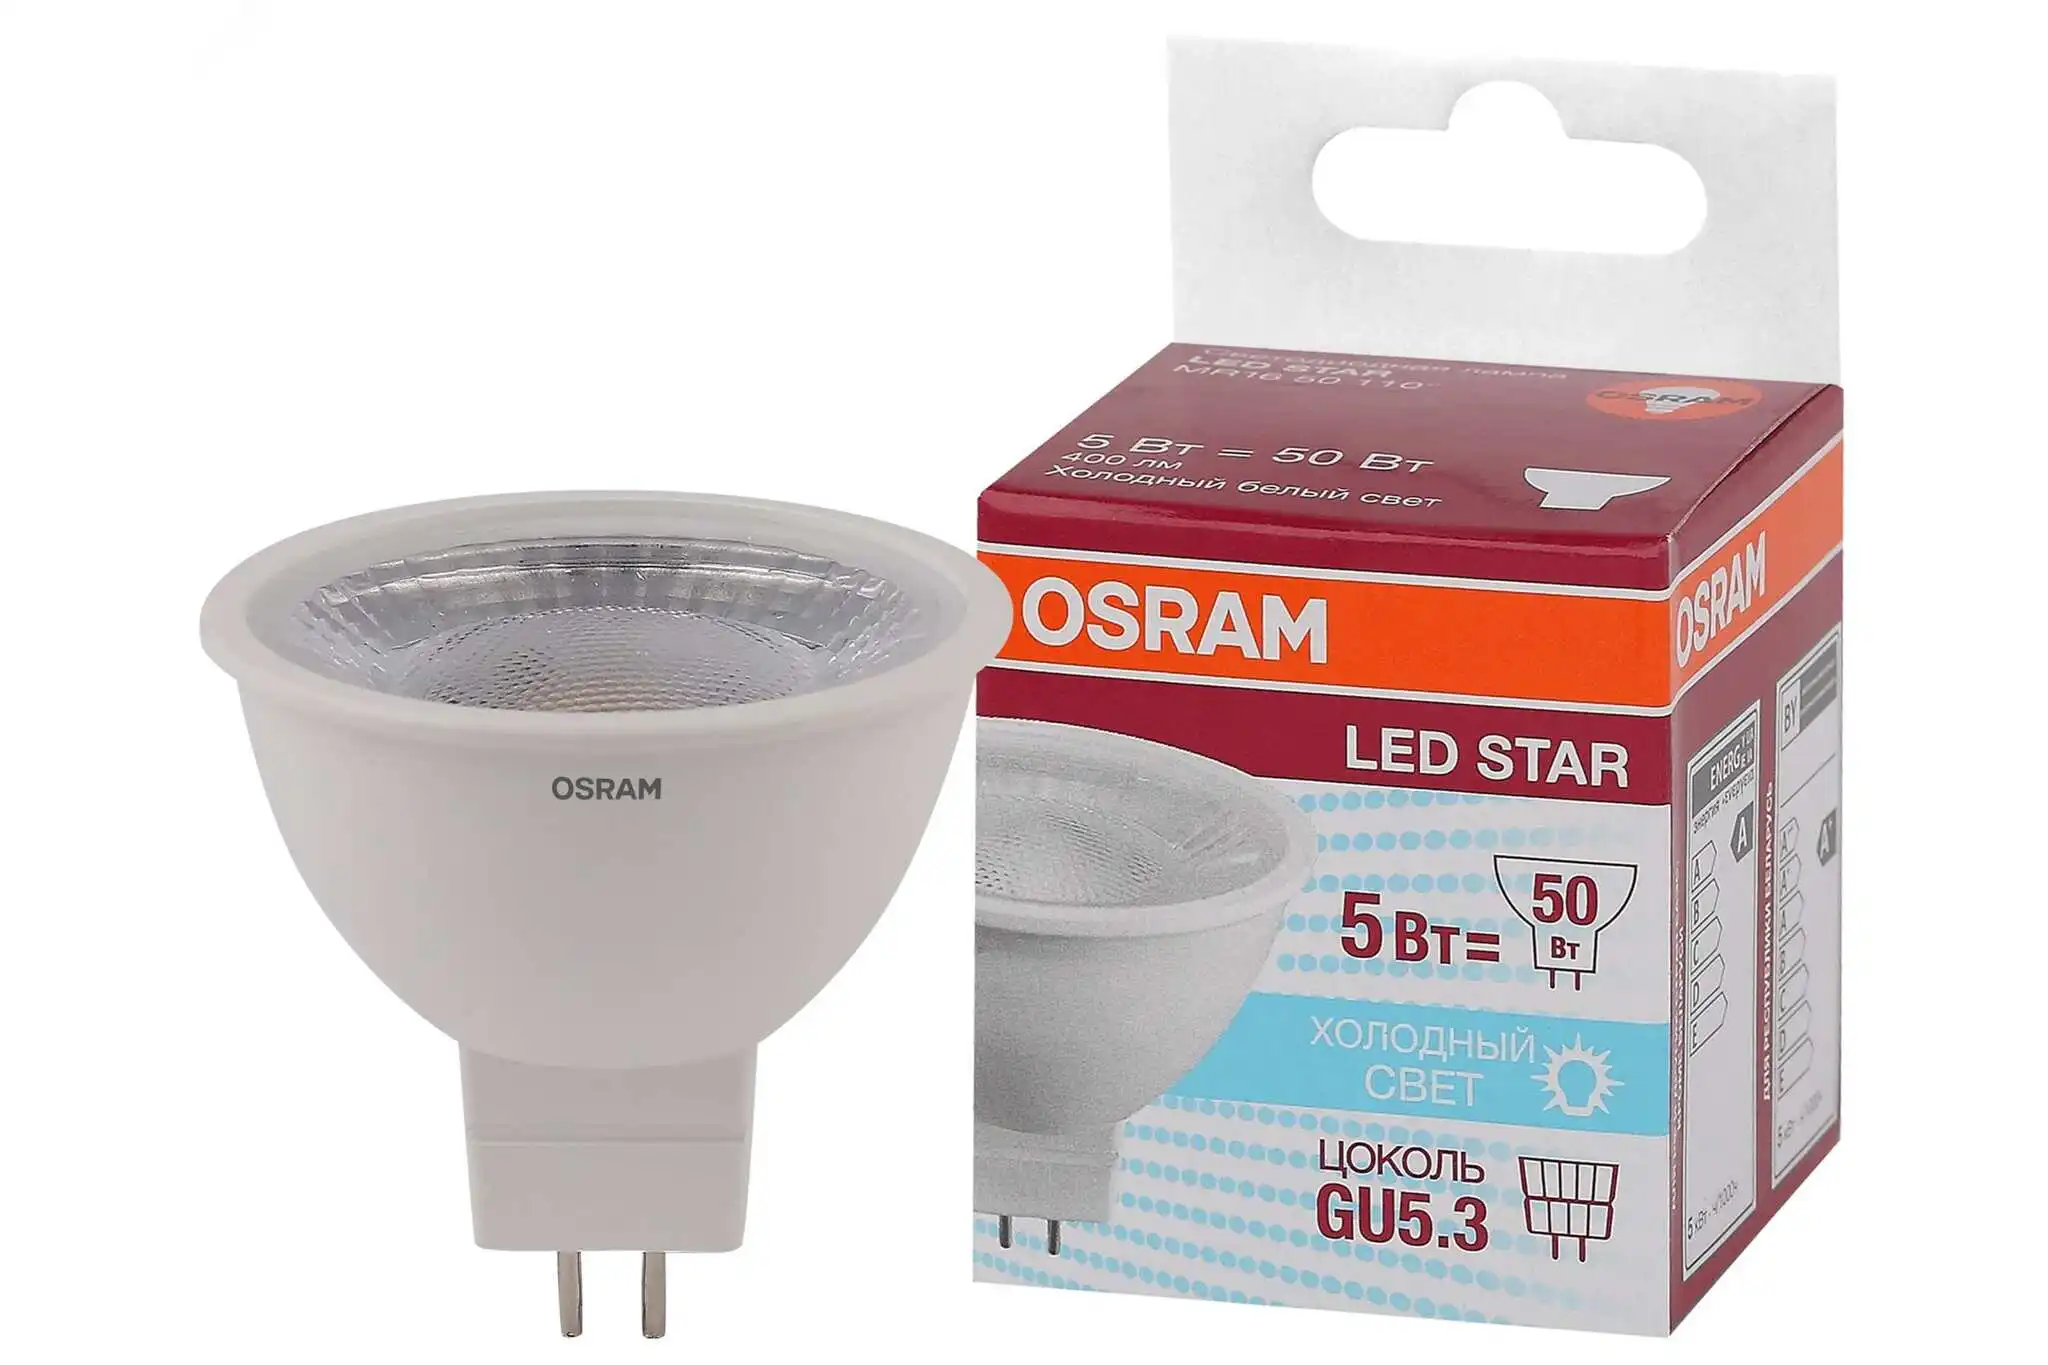 LED lamp OSRAM LED MR16, 5 GU5.3, LM, 5000 cold white light 4058075481190 - AliExpress